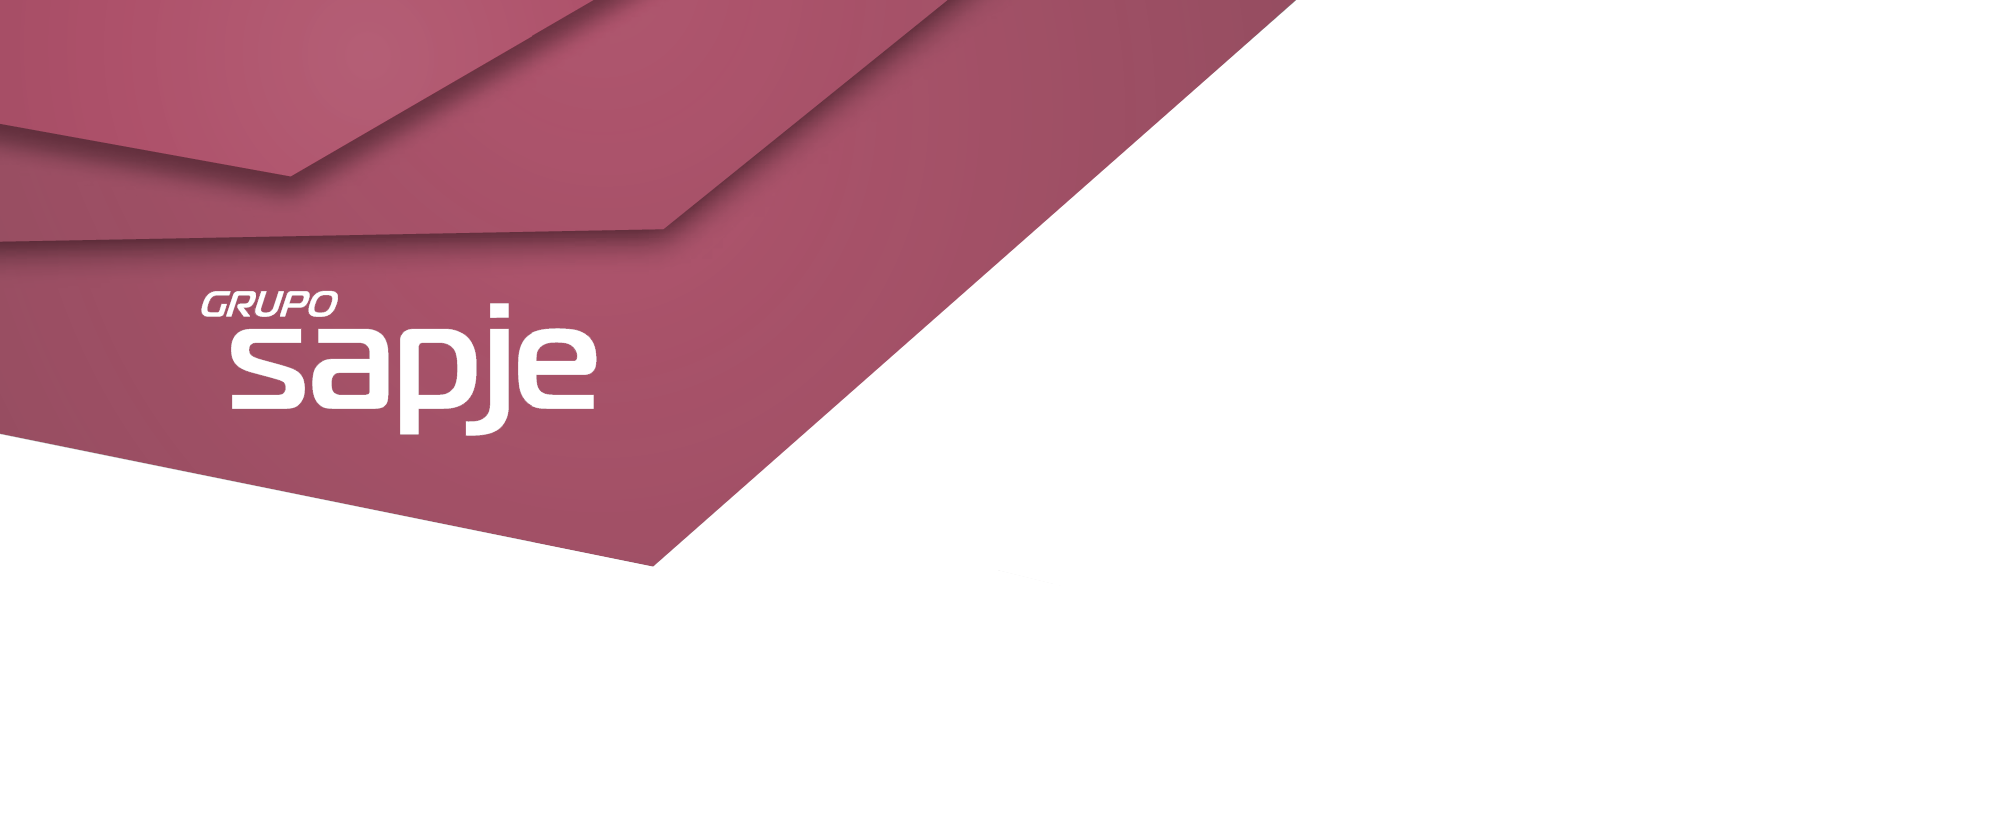 Cabecera con logo del grupo SAPJE púrpura